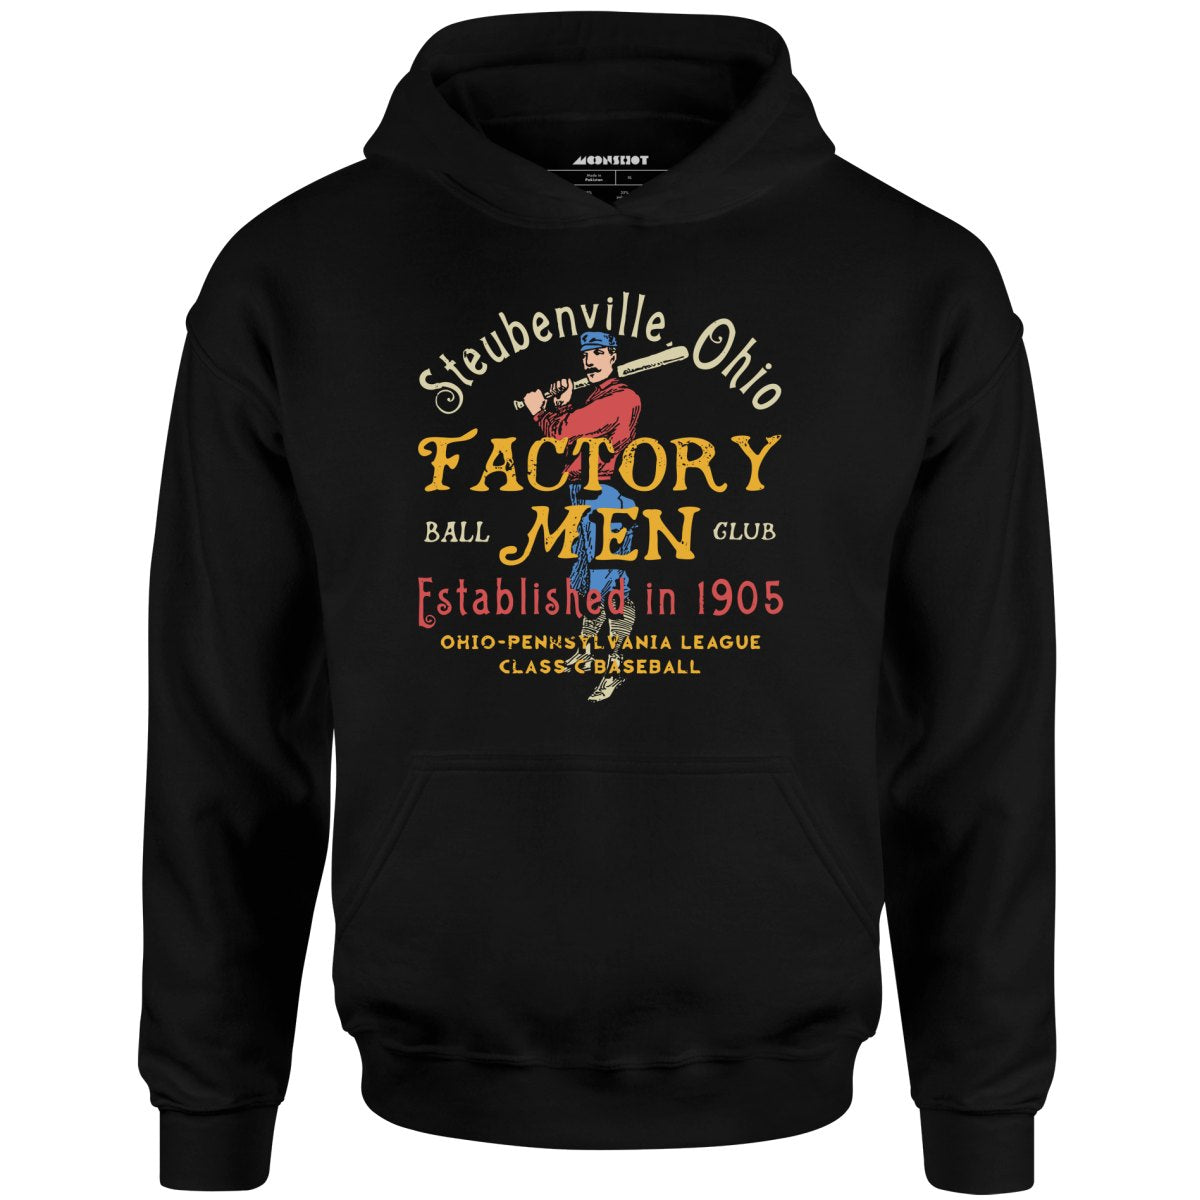 Steubenville Factory Men - Ohio - Vintage Defunct Baseball Teams - Unisex Hoodie